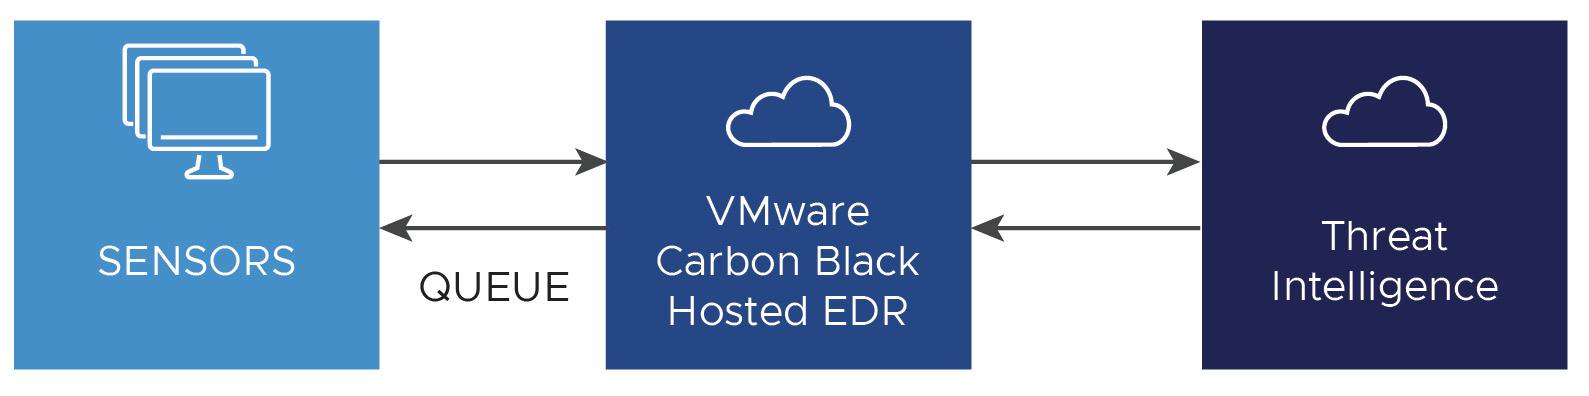 Carbon Black Hosted EDR Dataflow